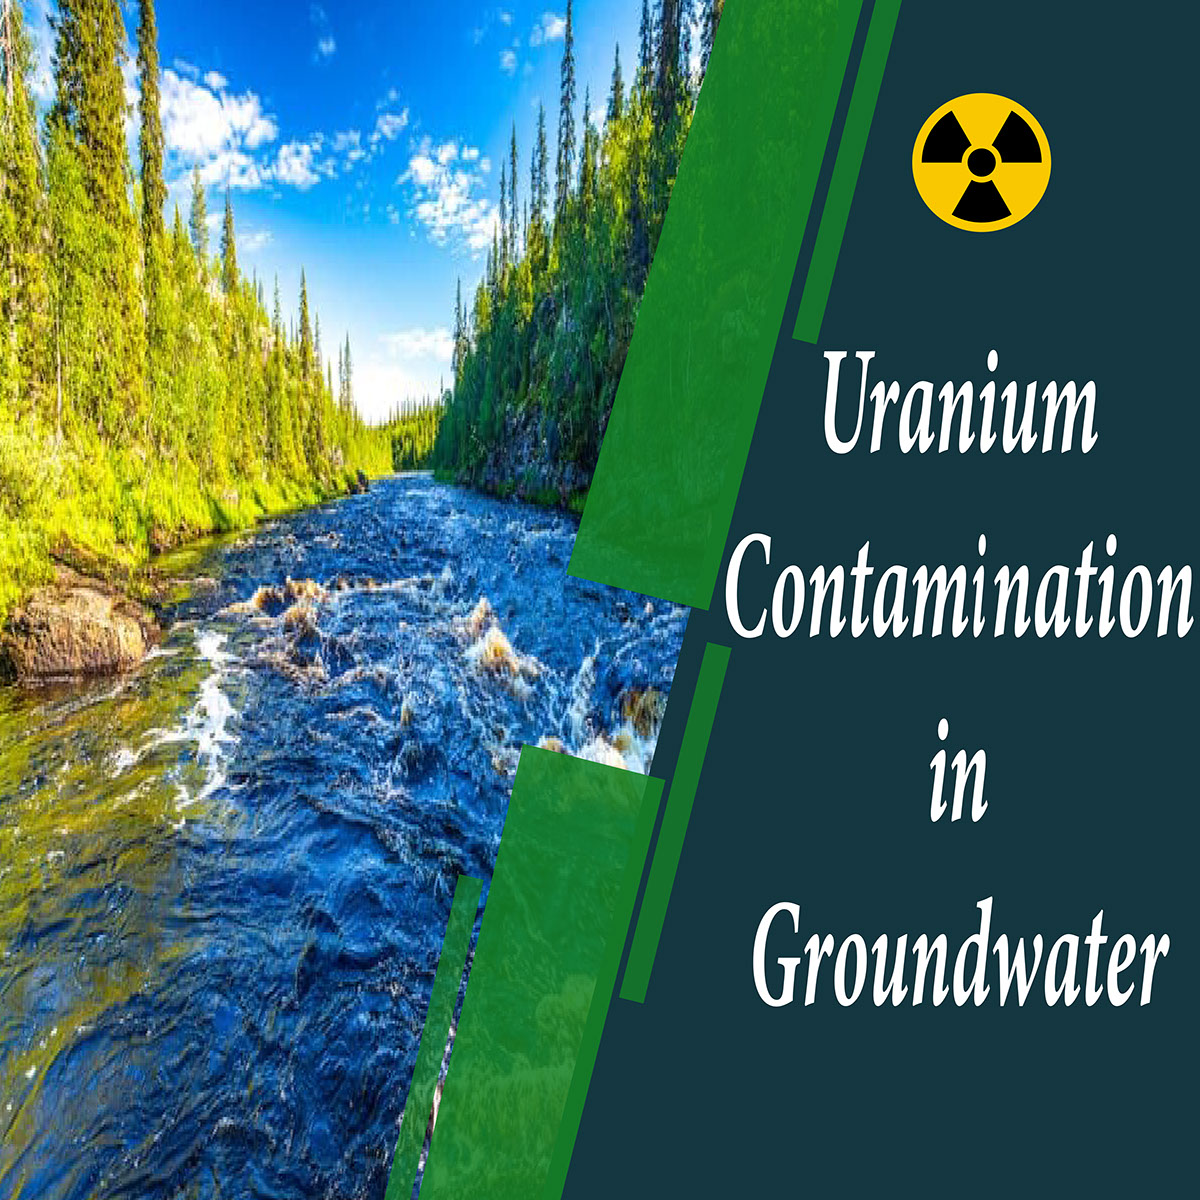 Uranium contamination in groundwater rendition image